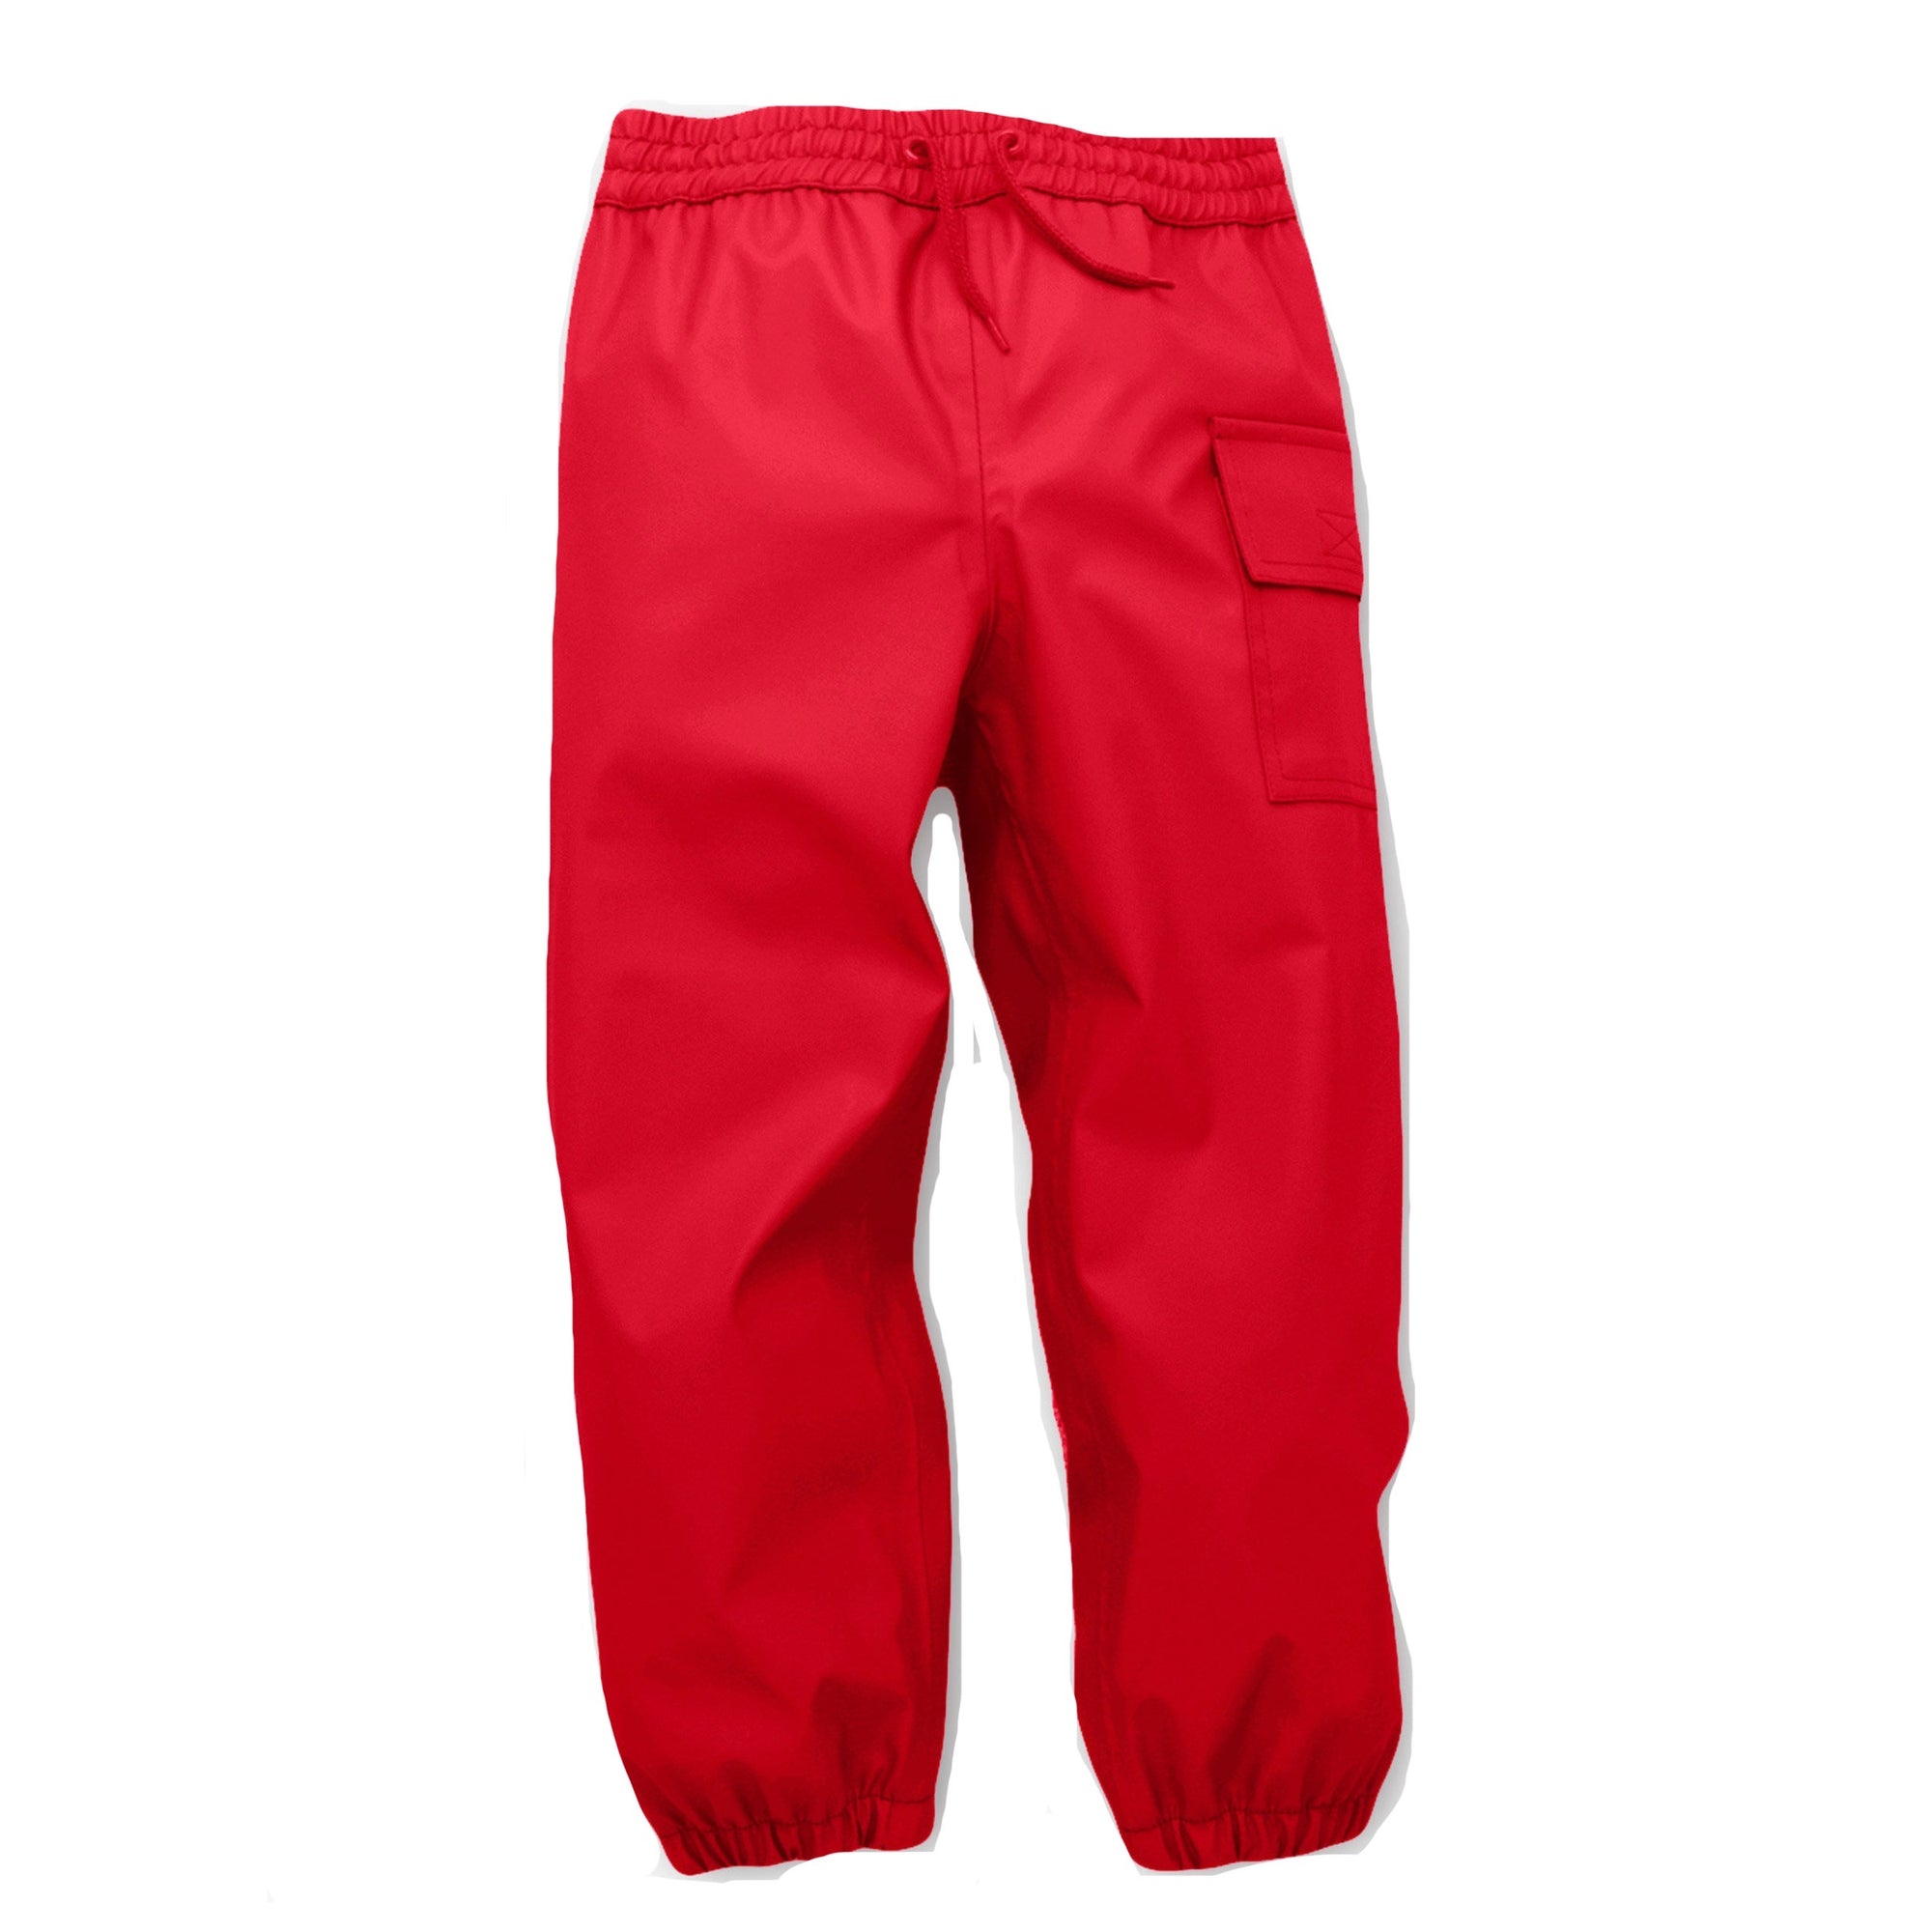 Hatley Splash Pants Rcpcgrd002 Red Clothing 2YRS / Red,3YRS / Red,4YRS / Red,5YRS / Red,6YRS / Red,7YRS / Red,8YRS / Red